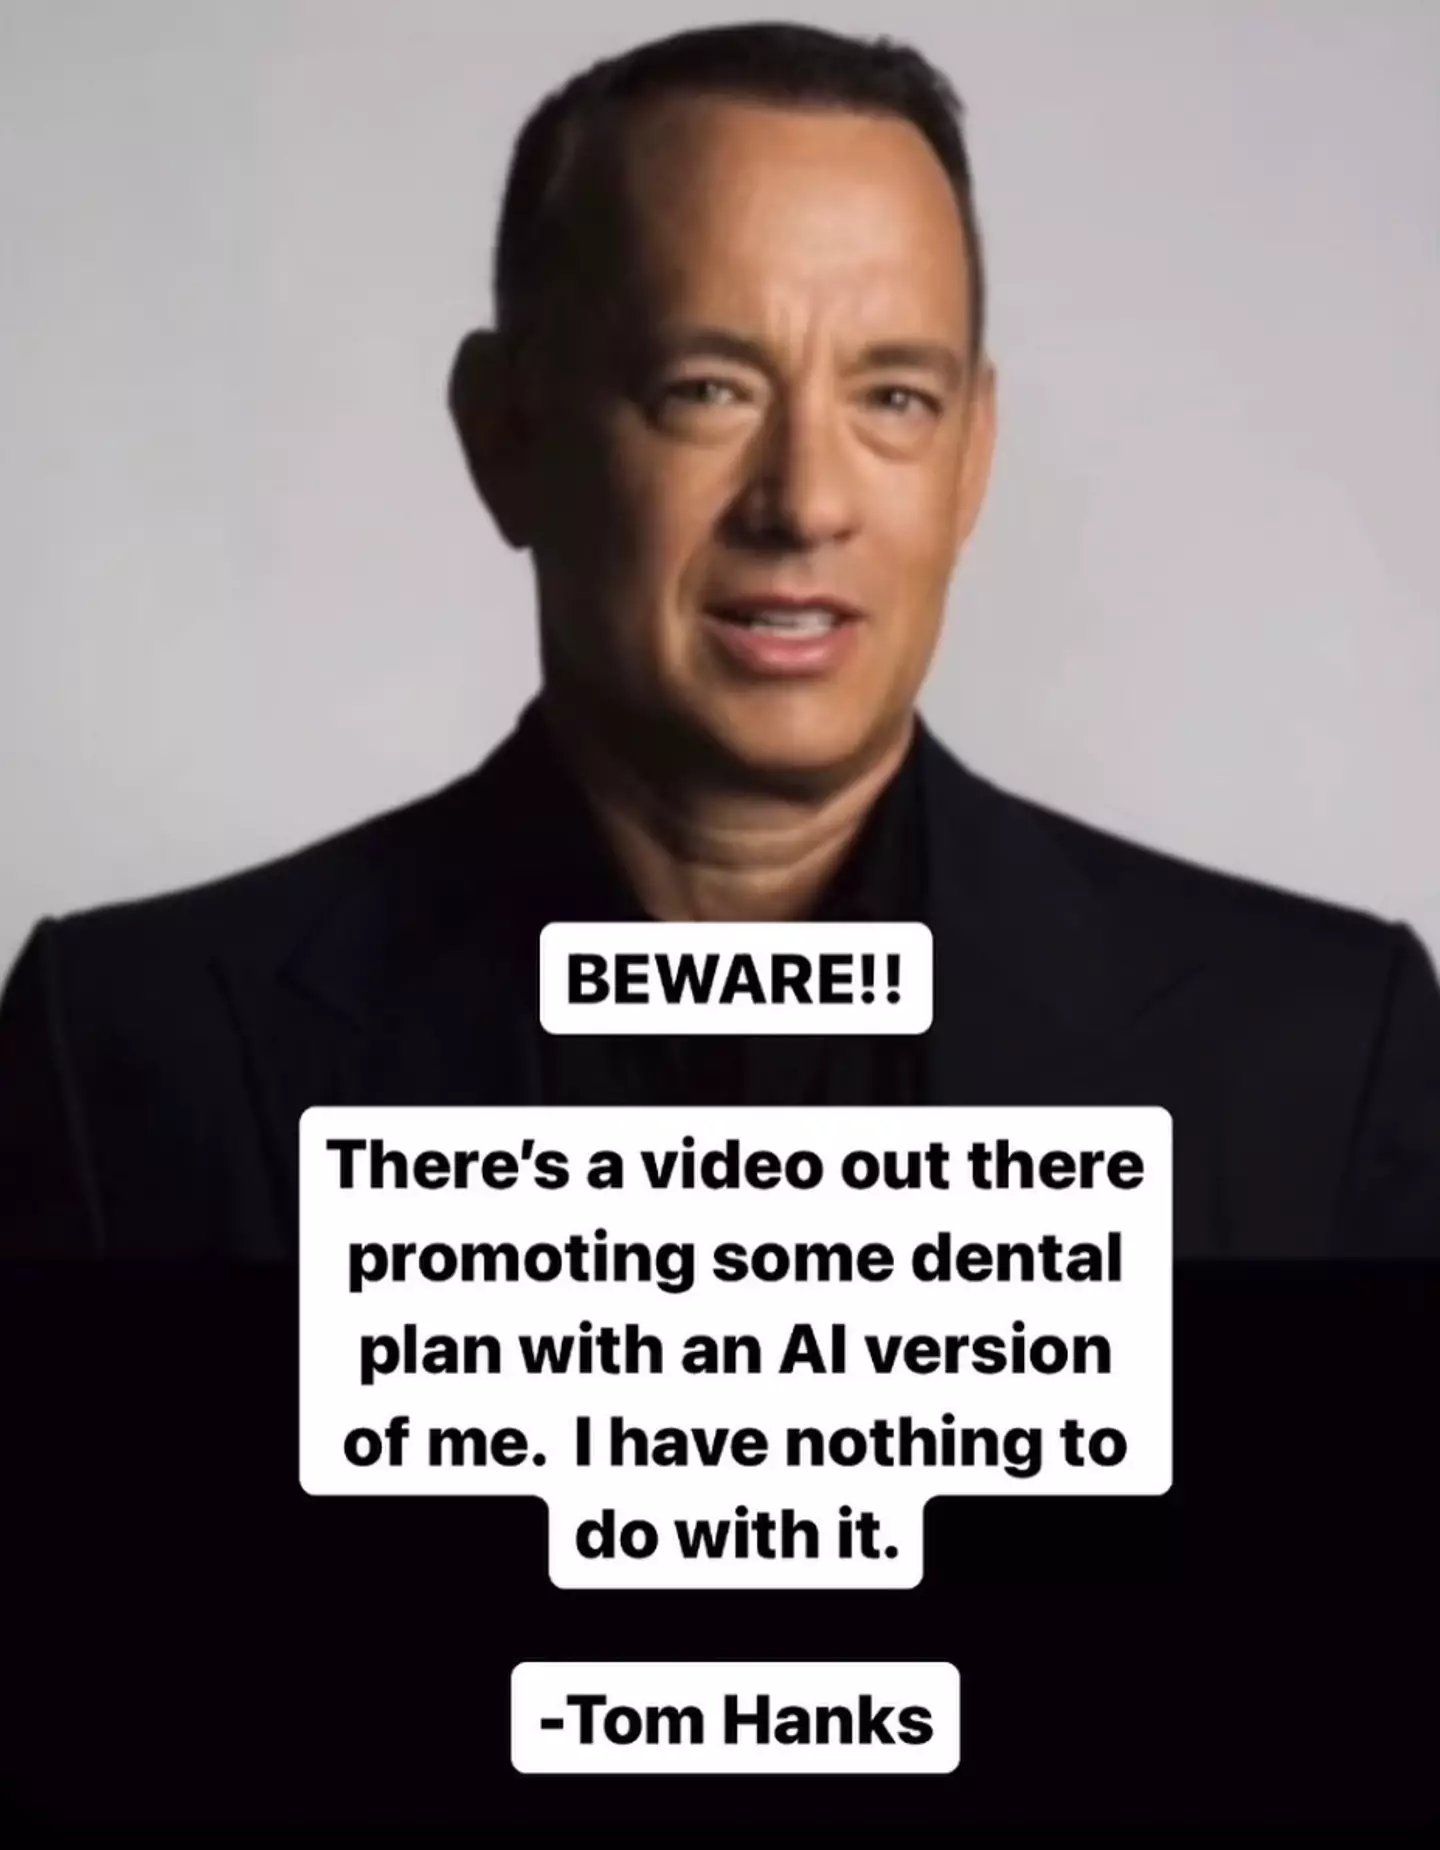 The digital version of Tom Hanks looked eerily familiar.